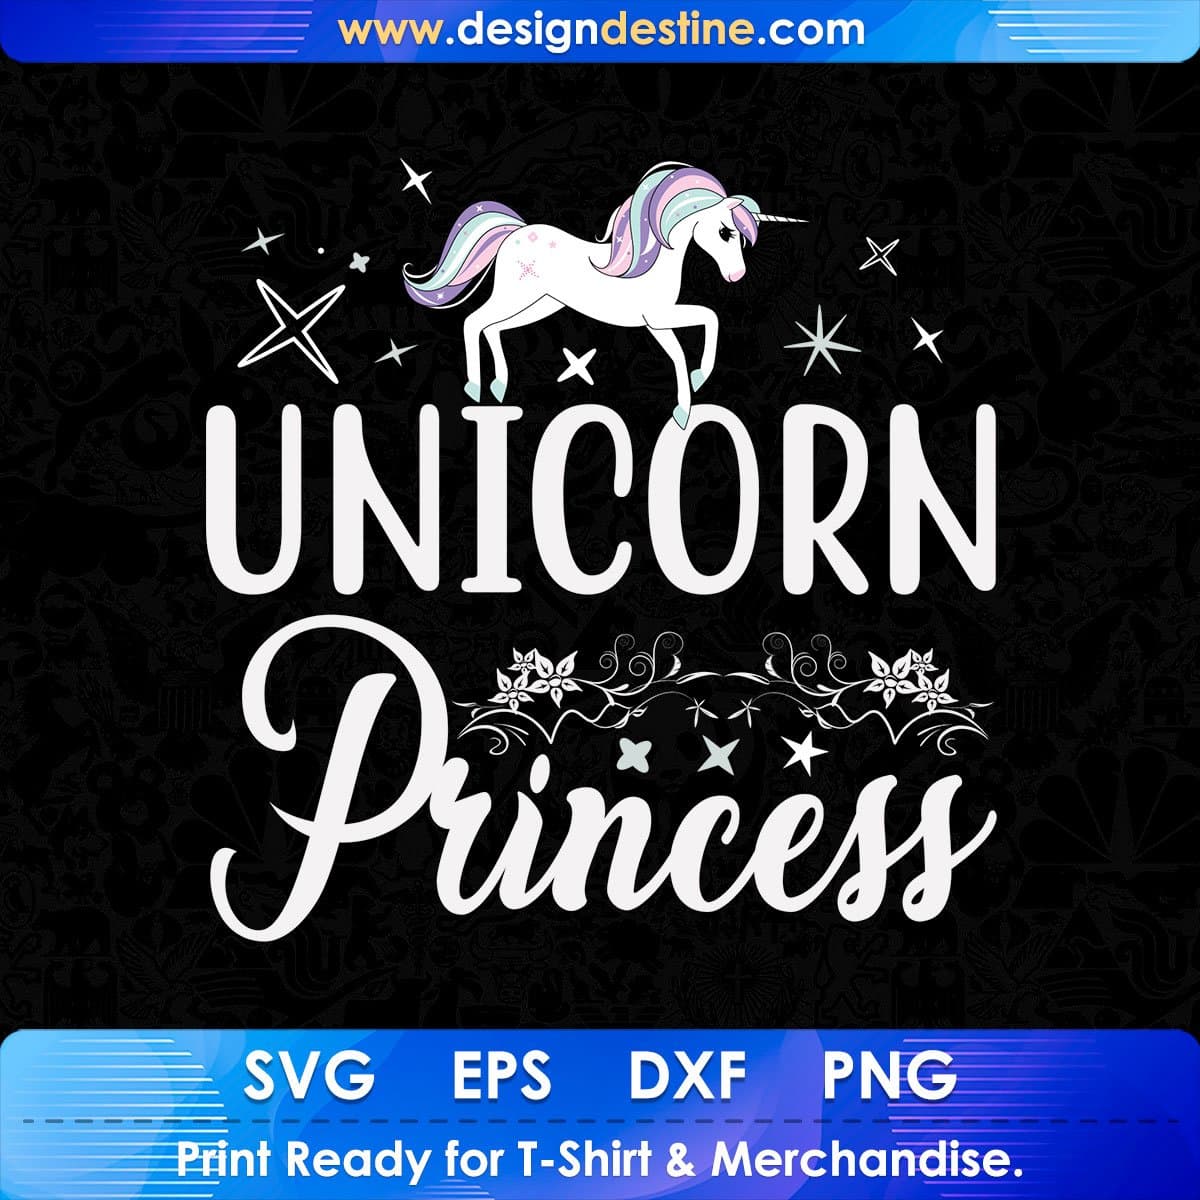 Unicorn Princess Animal T shirt Design In Svg Png Cutting Printable Files